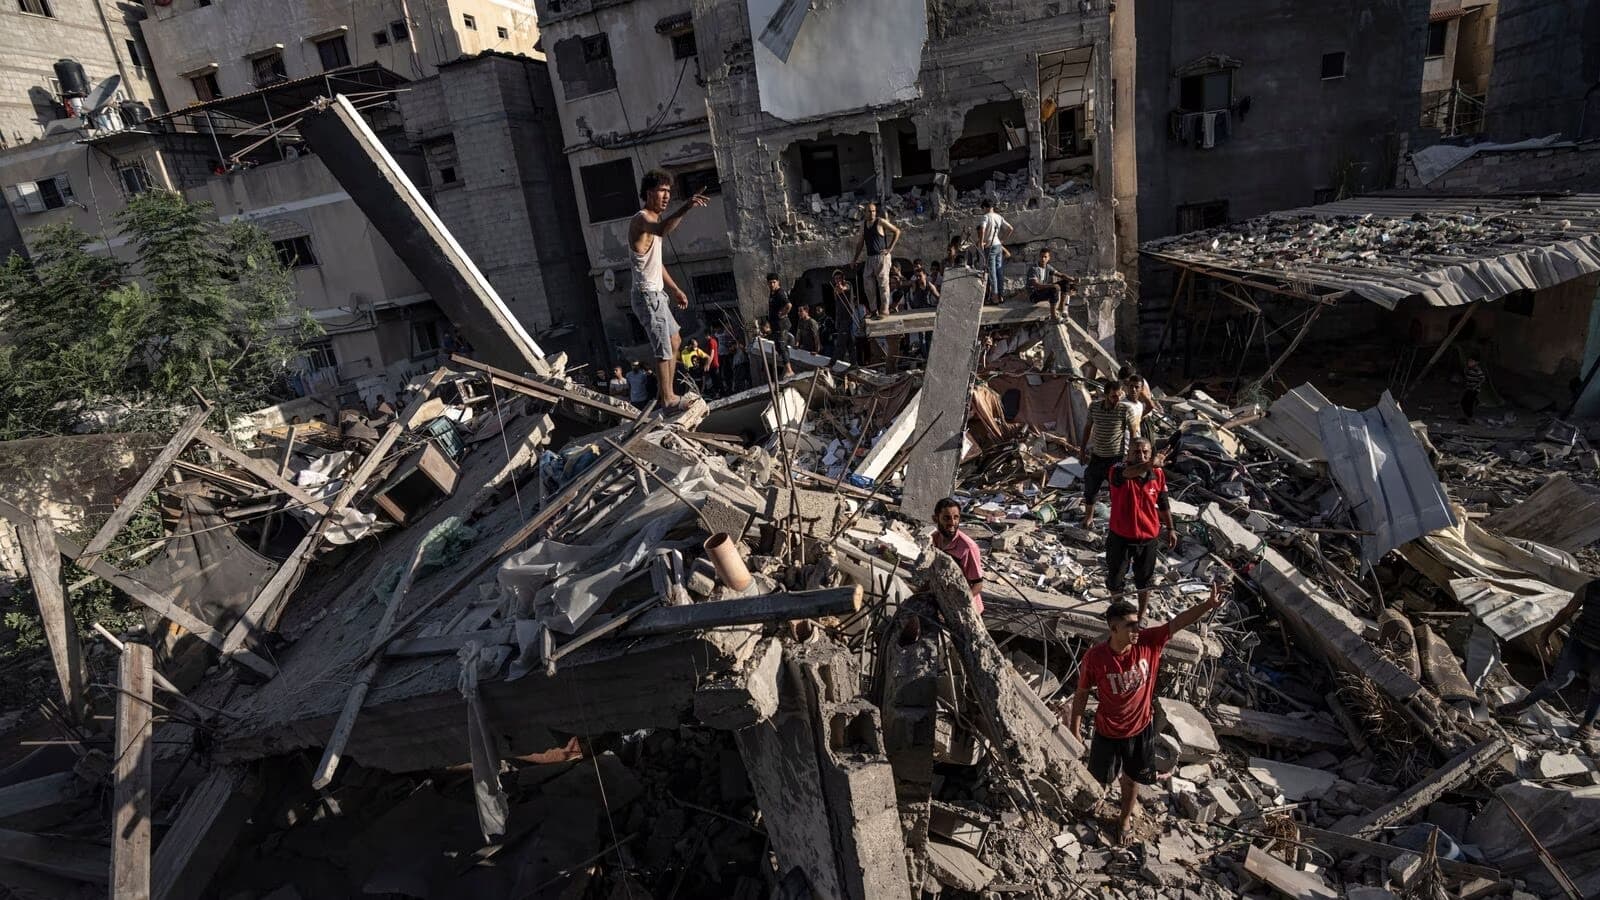 Israeli airstrikes claim 18 lives, raising concerns in Gaza (Credits: Mint)